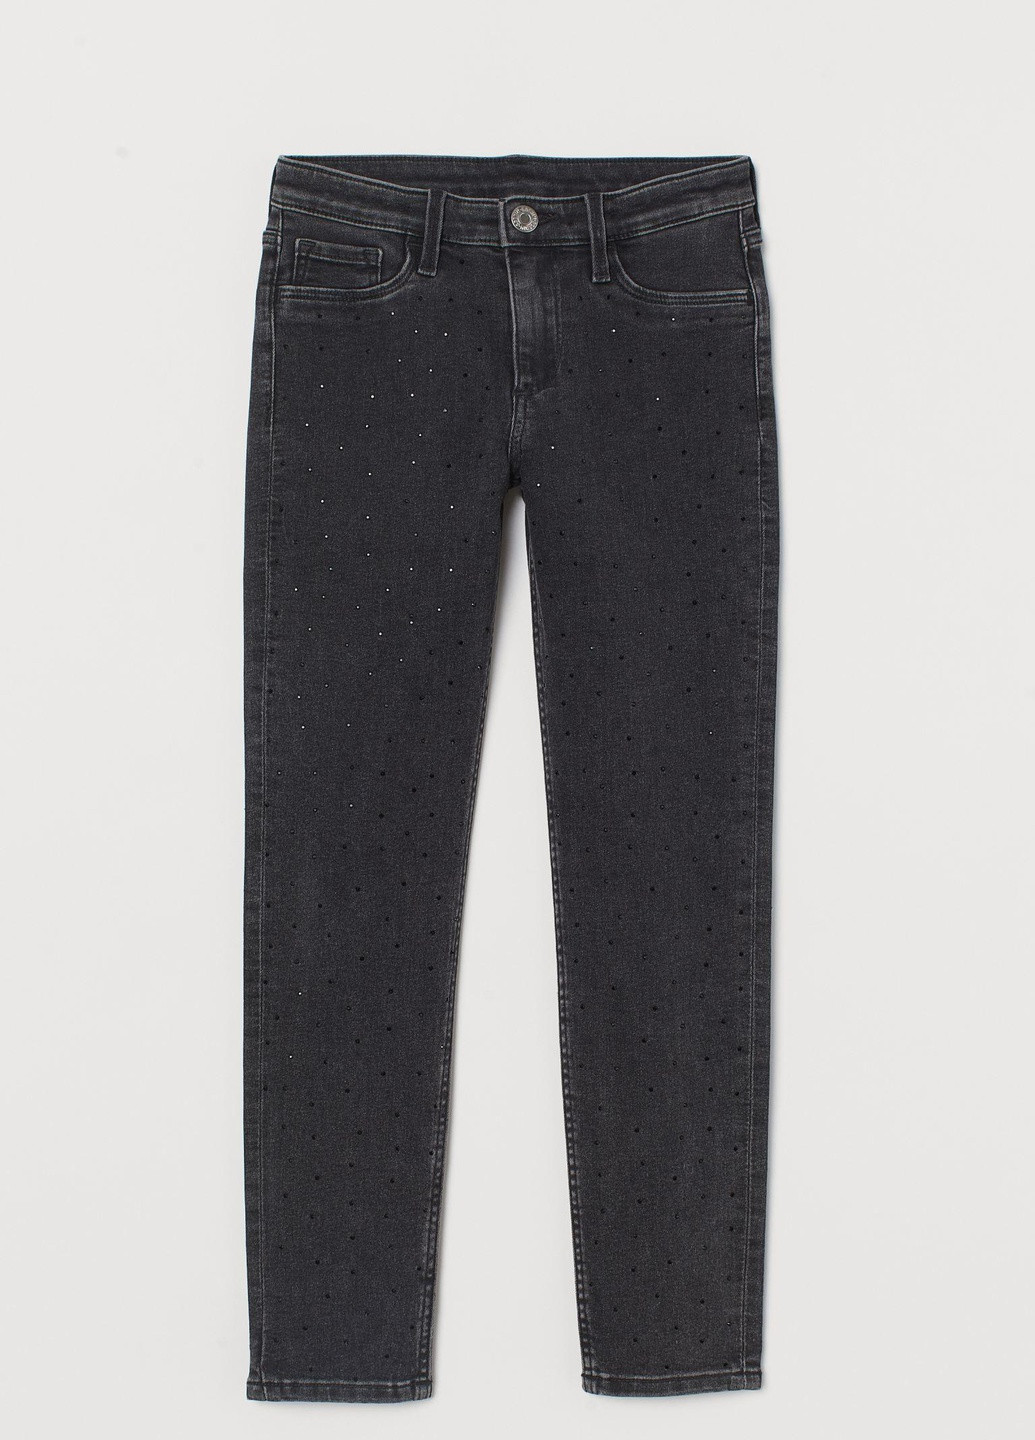 Черные джинси демісезон,світло-чорний, H&M